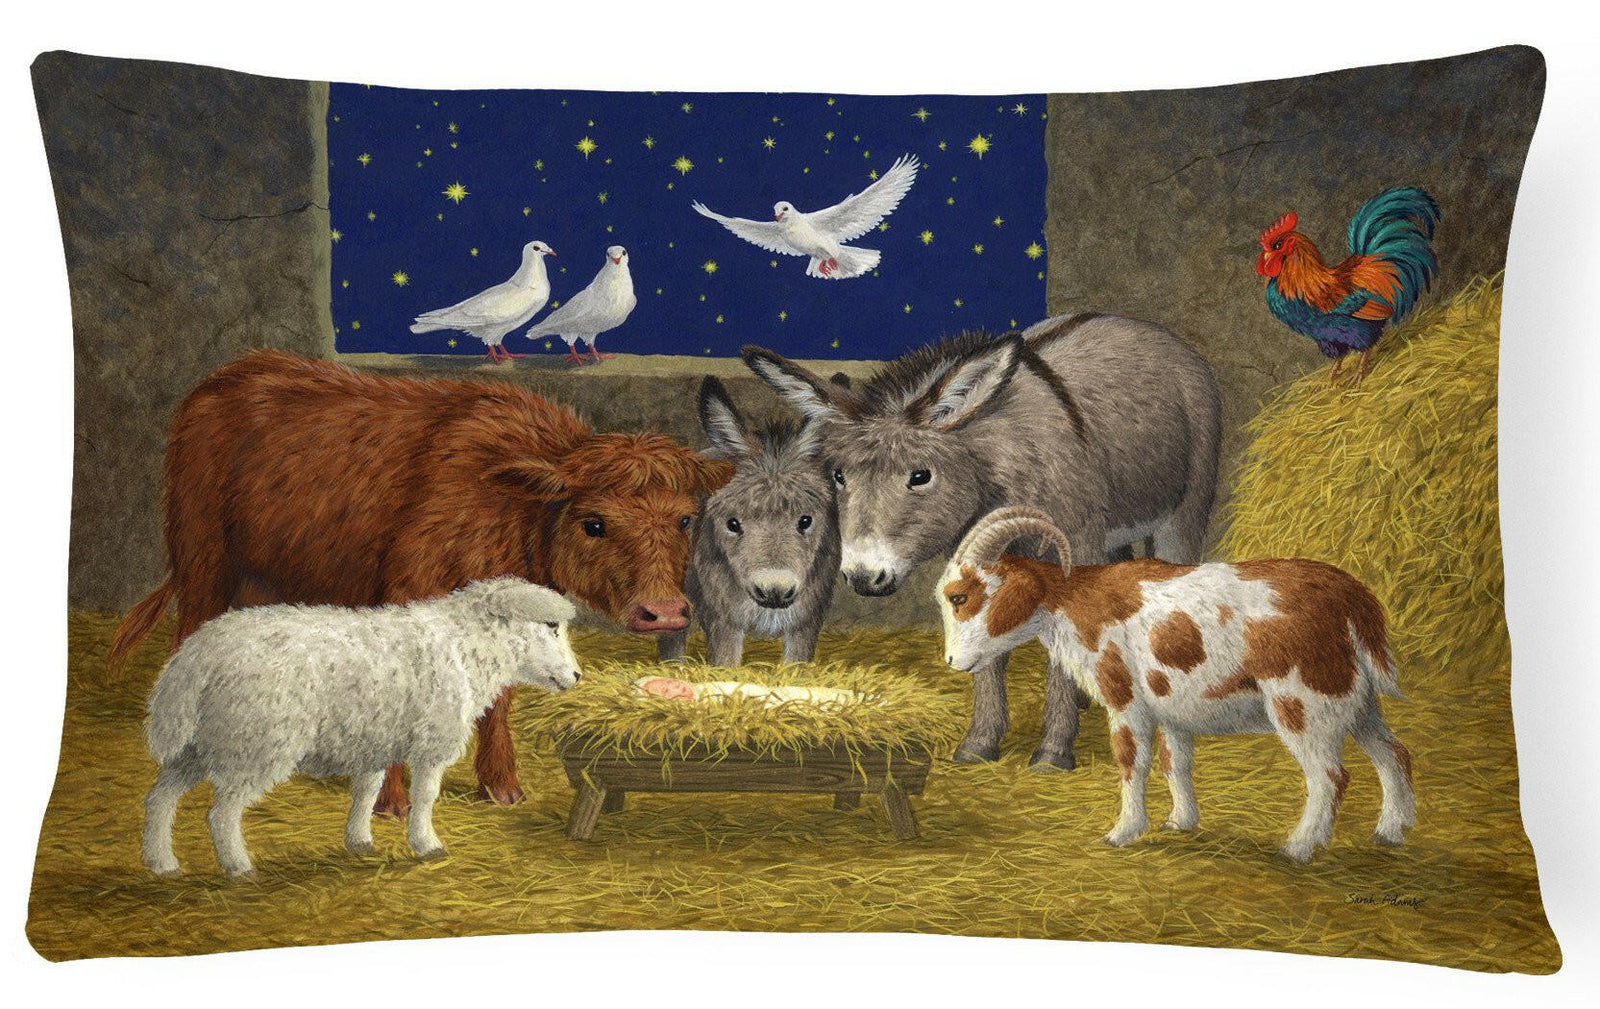 Animals at Crib Nativity Christmas Scene Fabric Decorative Pillow ASA2205PW1216 by Caroline's Treasures